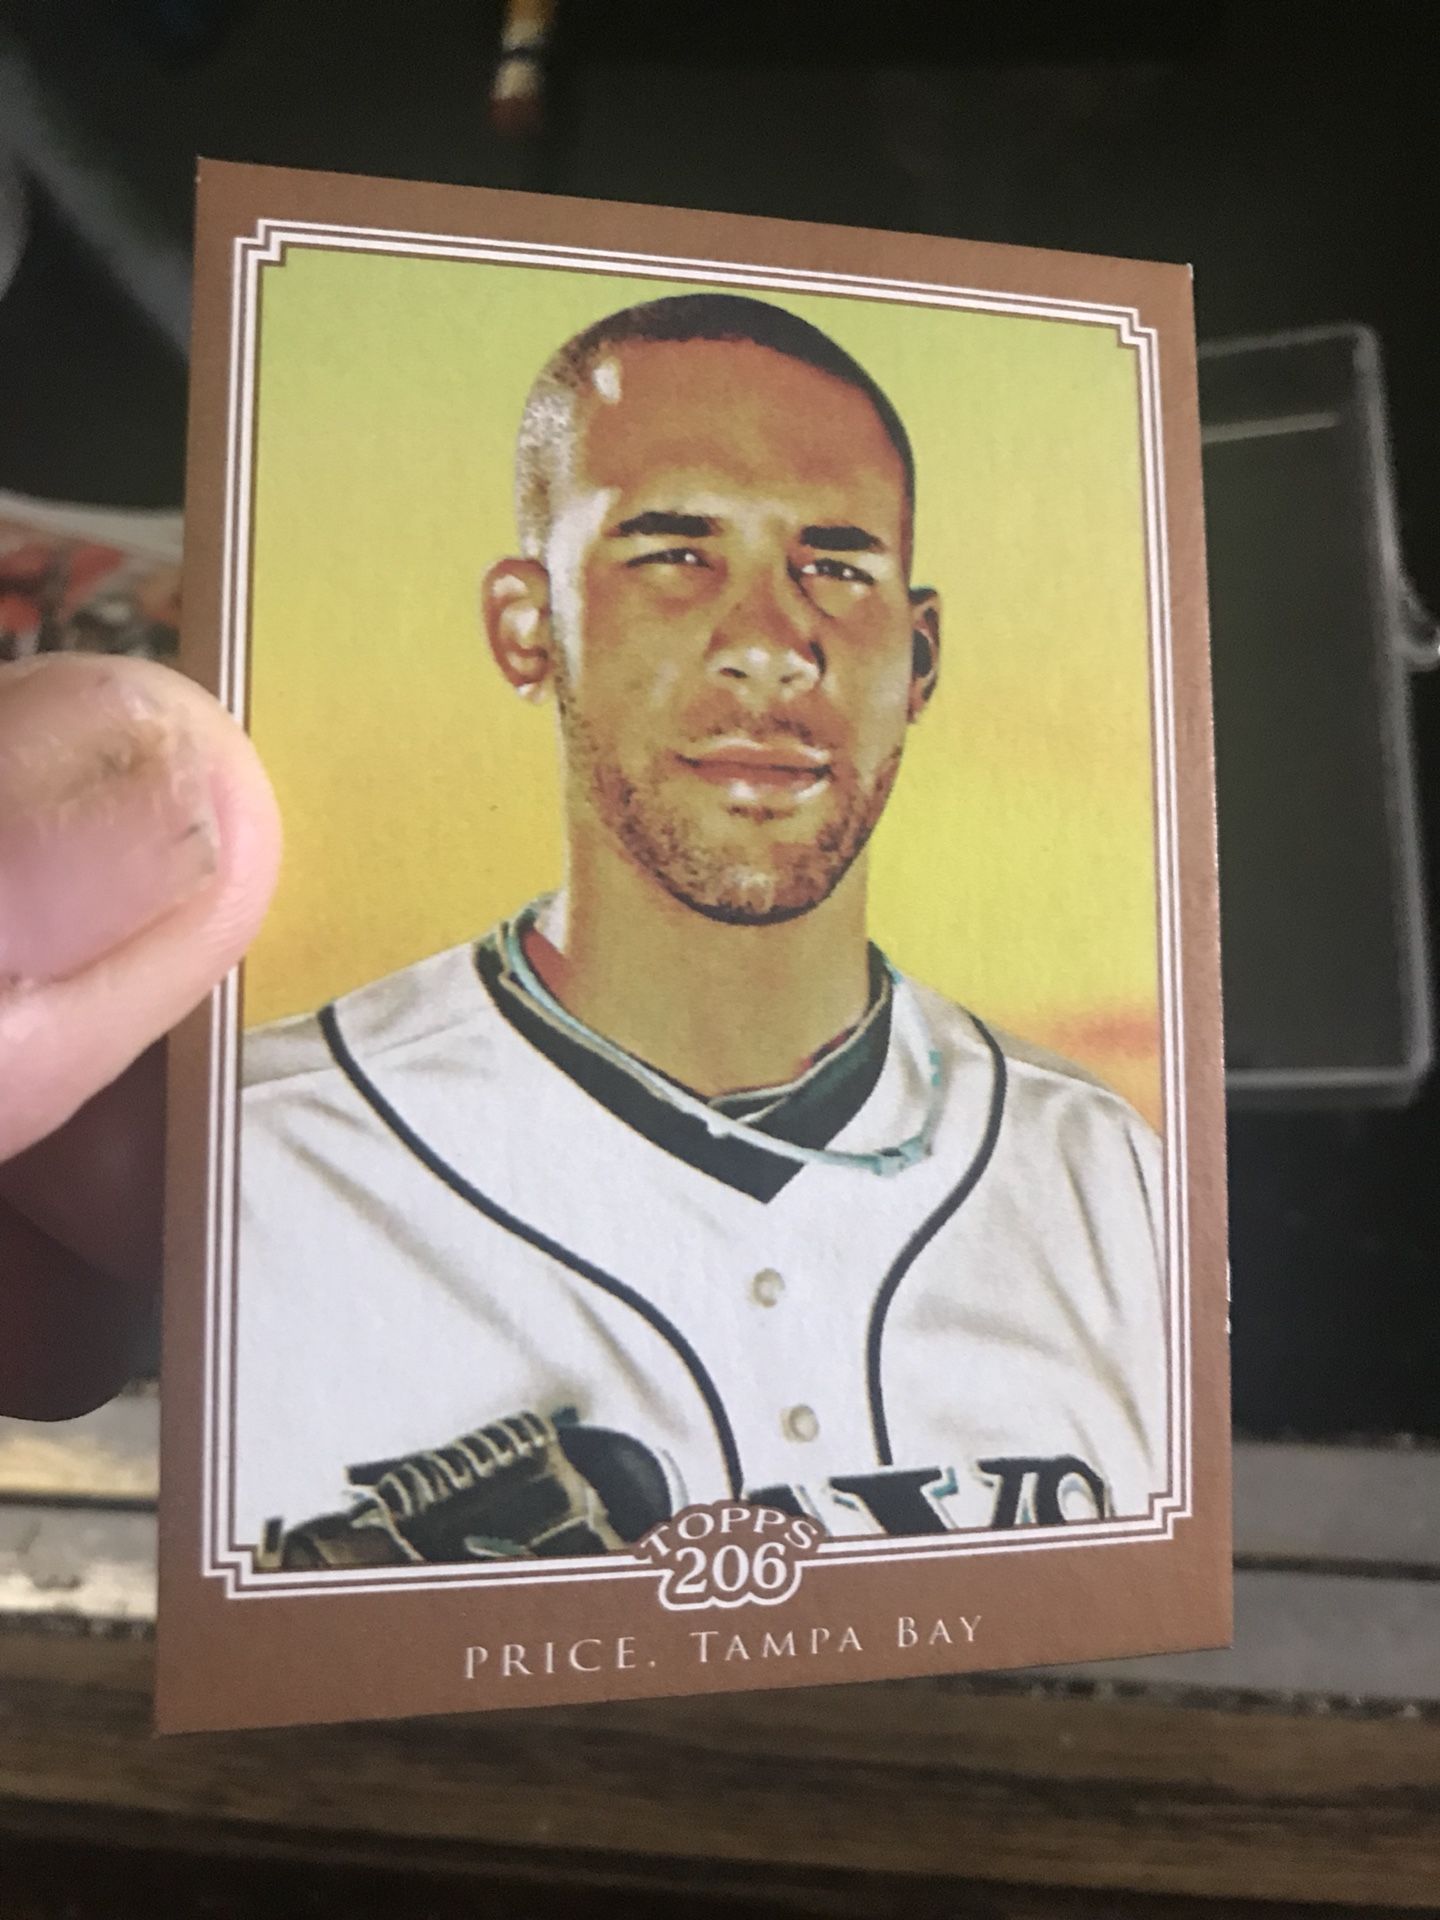 David price 2010’topps baseball card